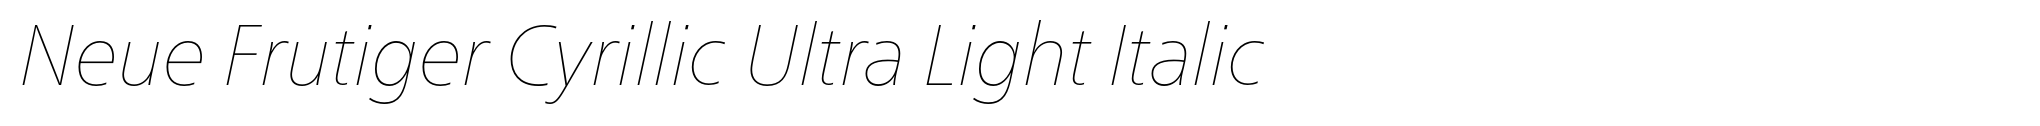 Neue Frutiger Cyrillic Ultra Light Italic image